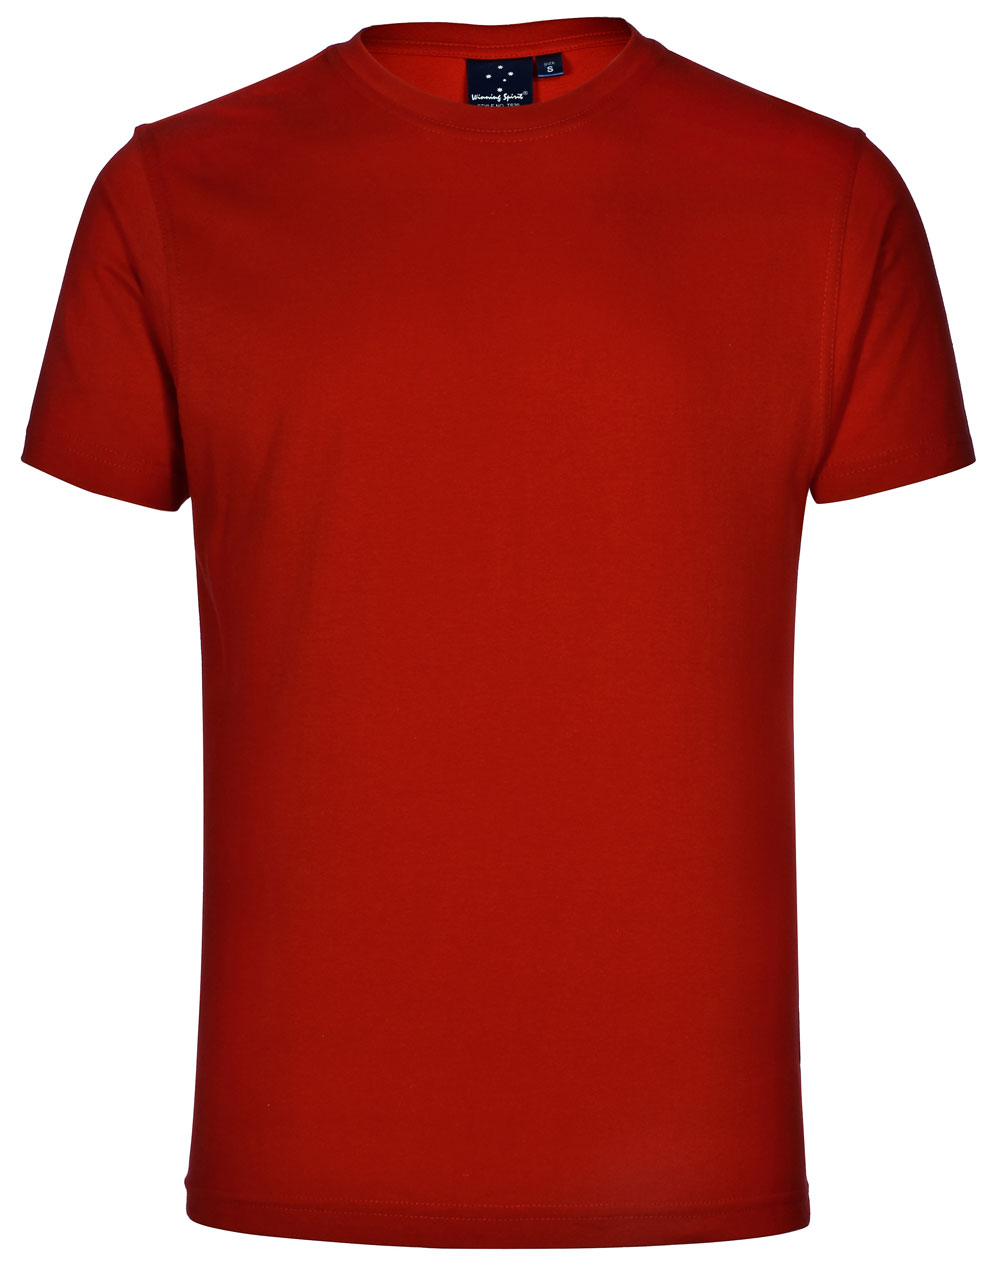 Custom Made (Red) Budget Unisex Crew Neck T-Shirts Mens Online Perth Australia